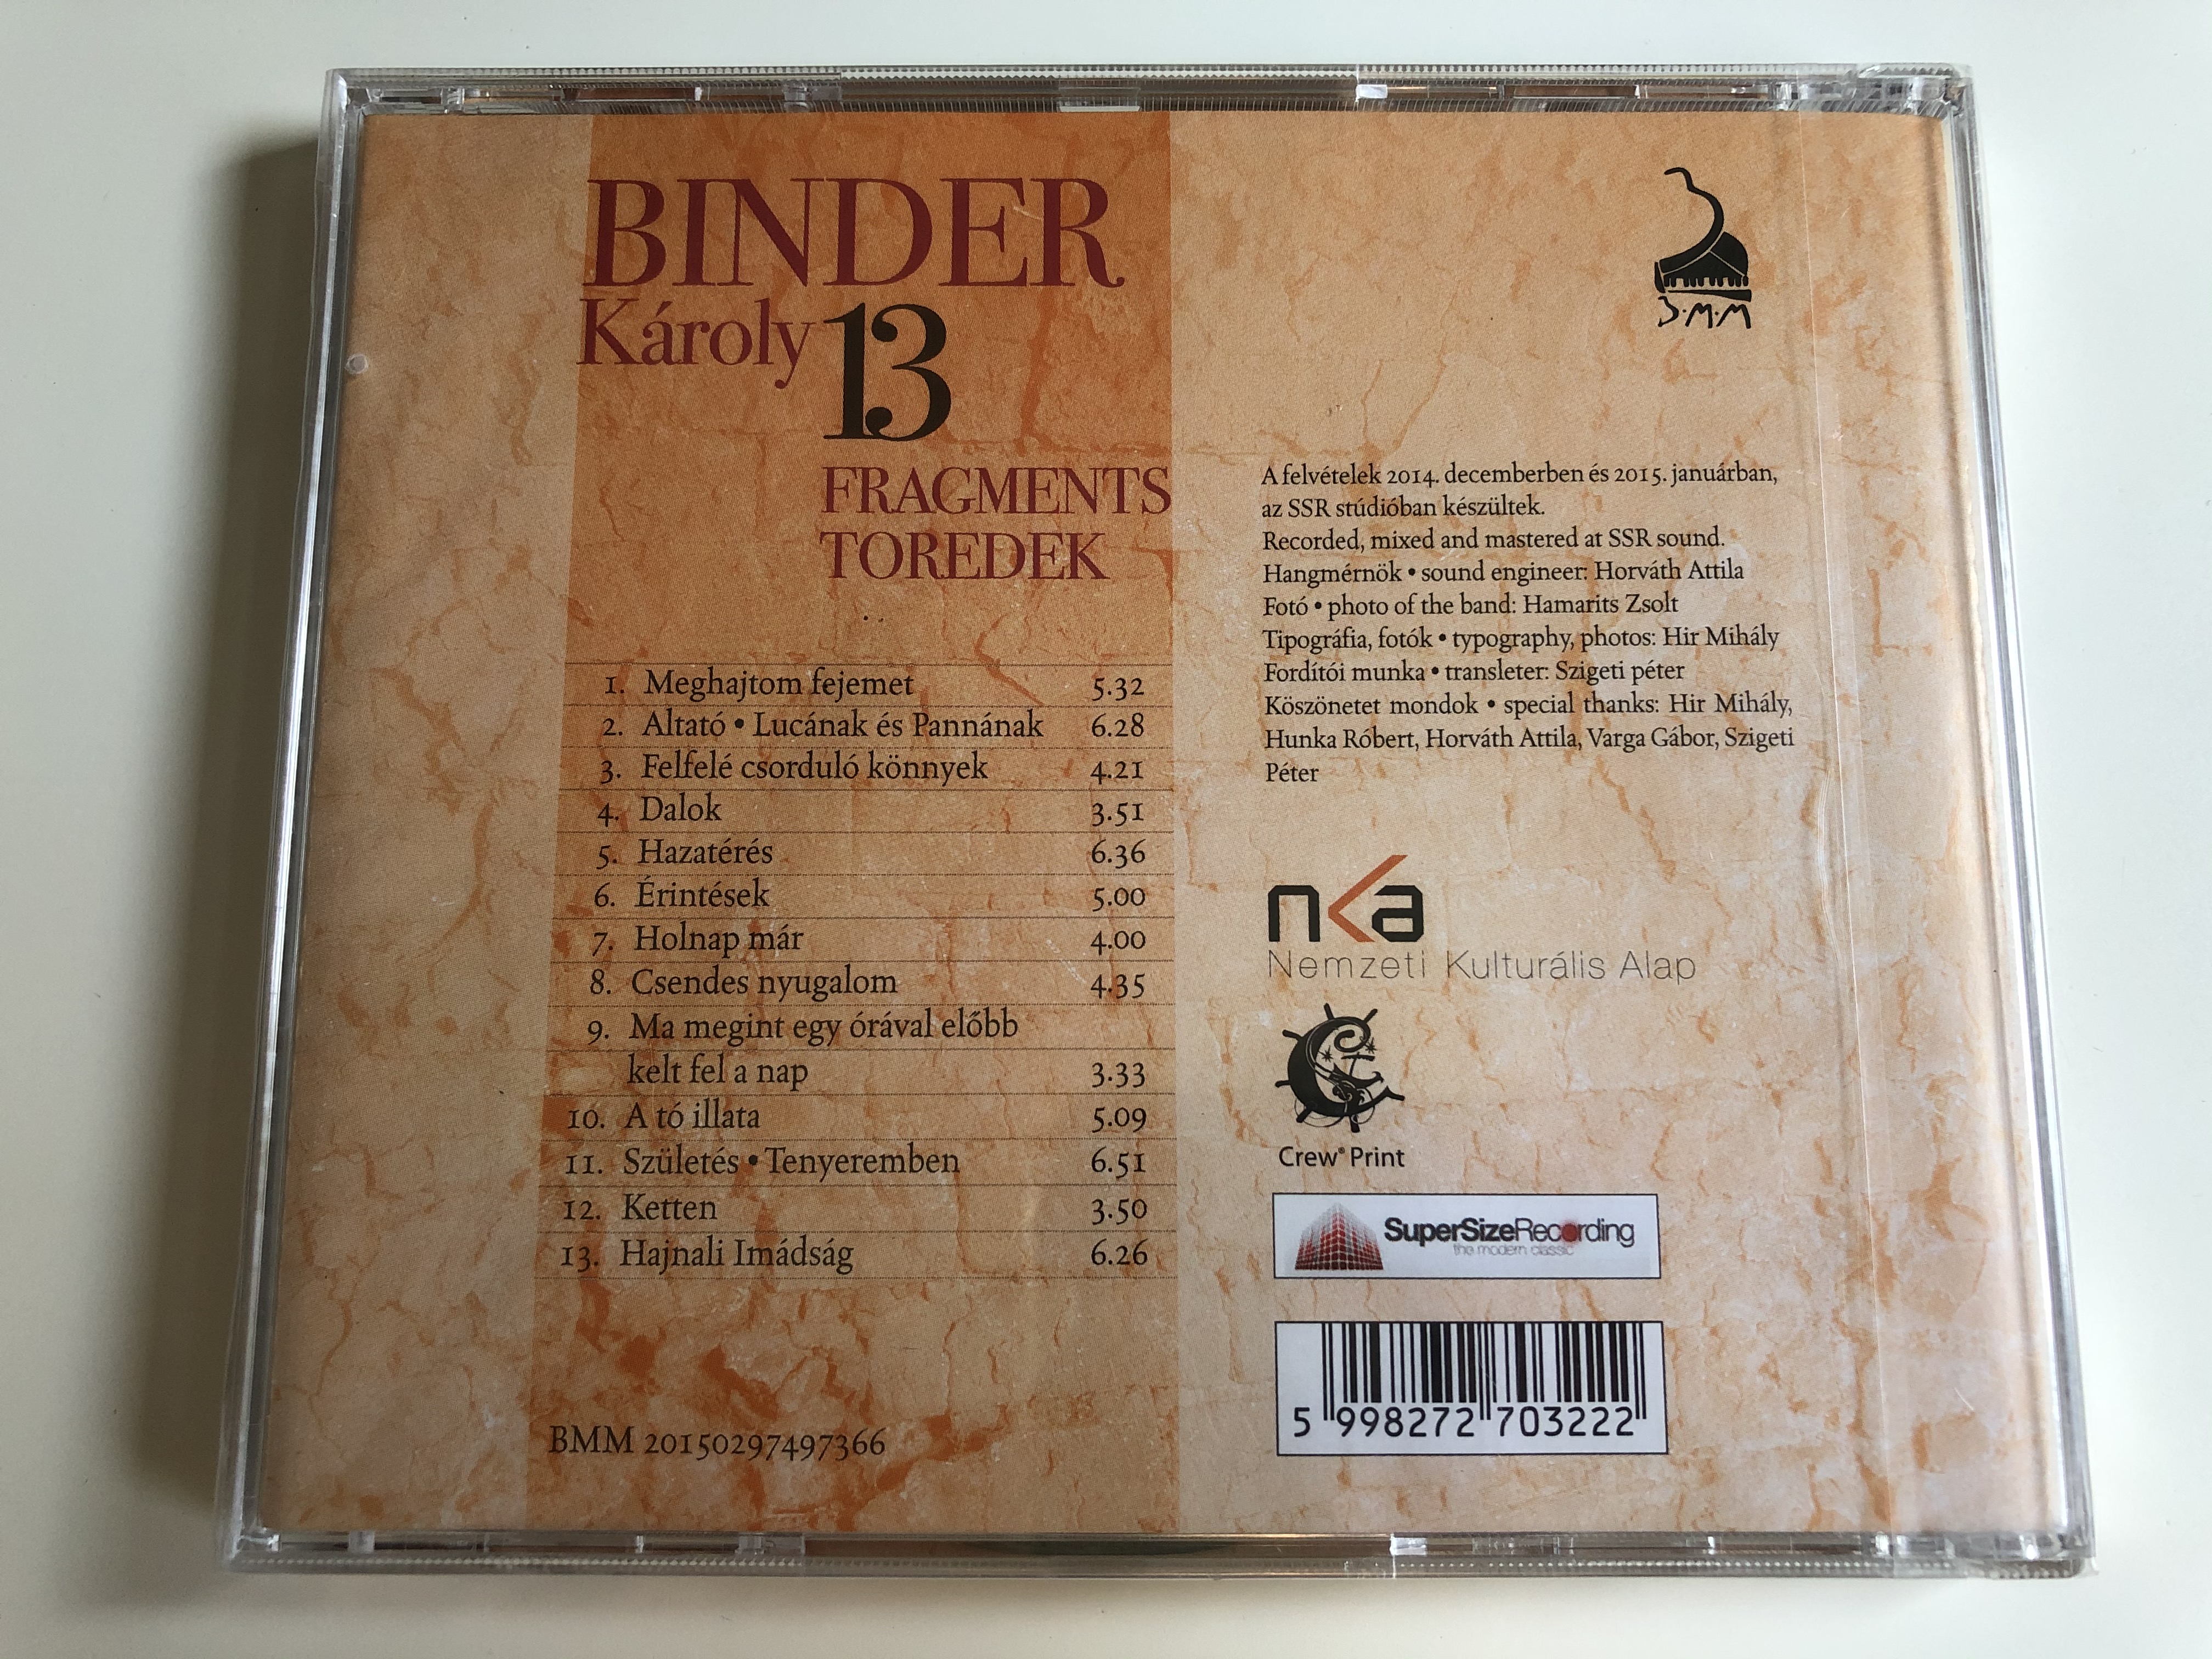 binder-karoly-13-fragments-toredek-bmm-audio-cd-2014-bmm-20150297497366-2-.jpg